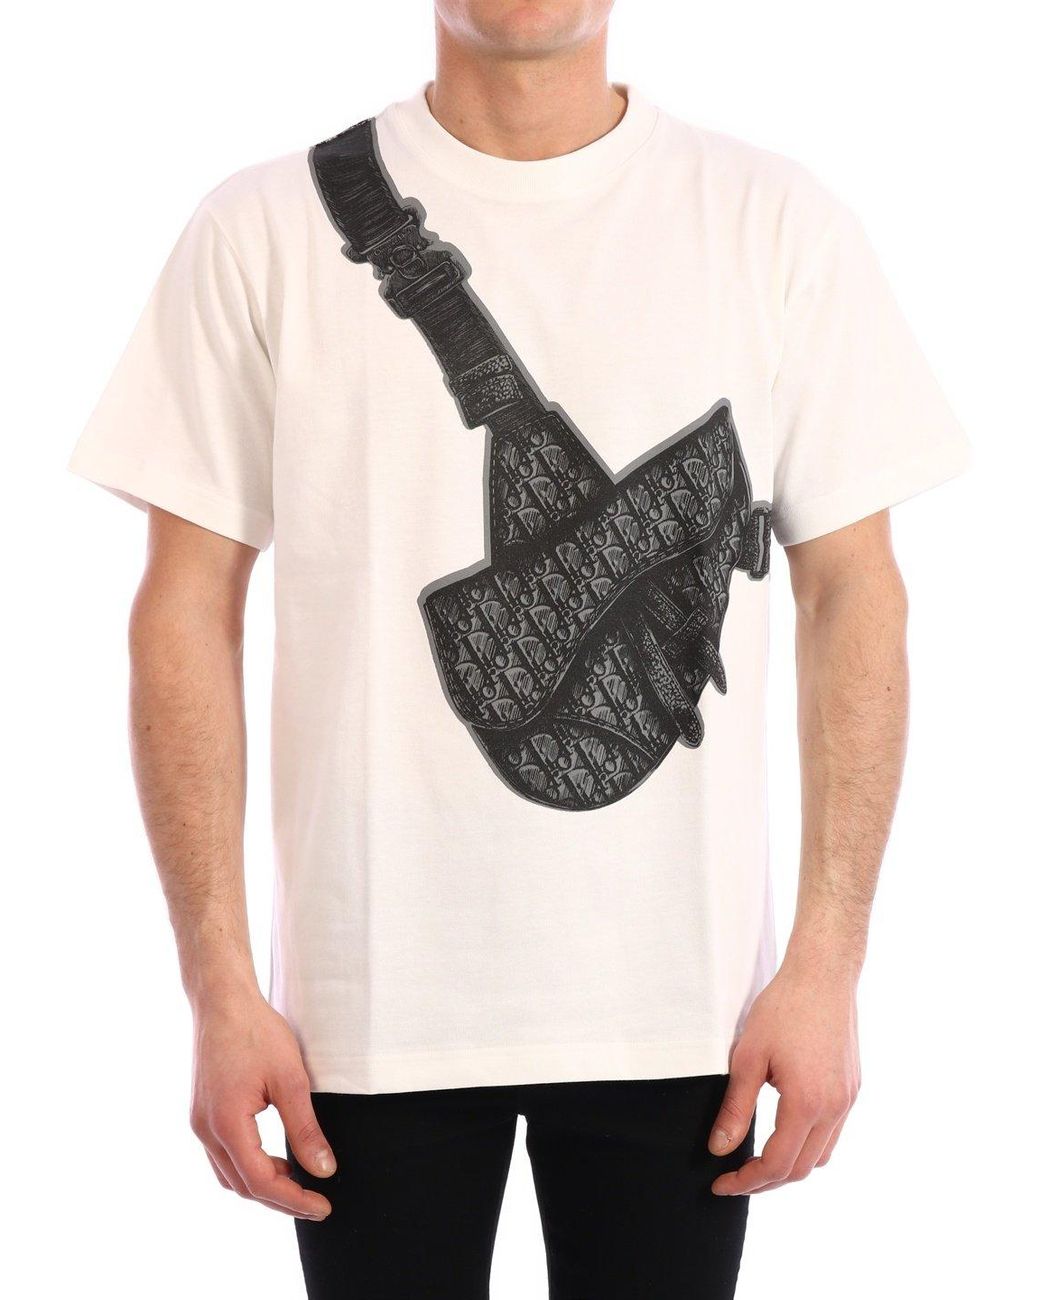 DIOR Saddle Bag Printed Tshirt  Moretti Menswear  Facebook